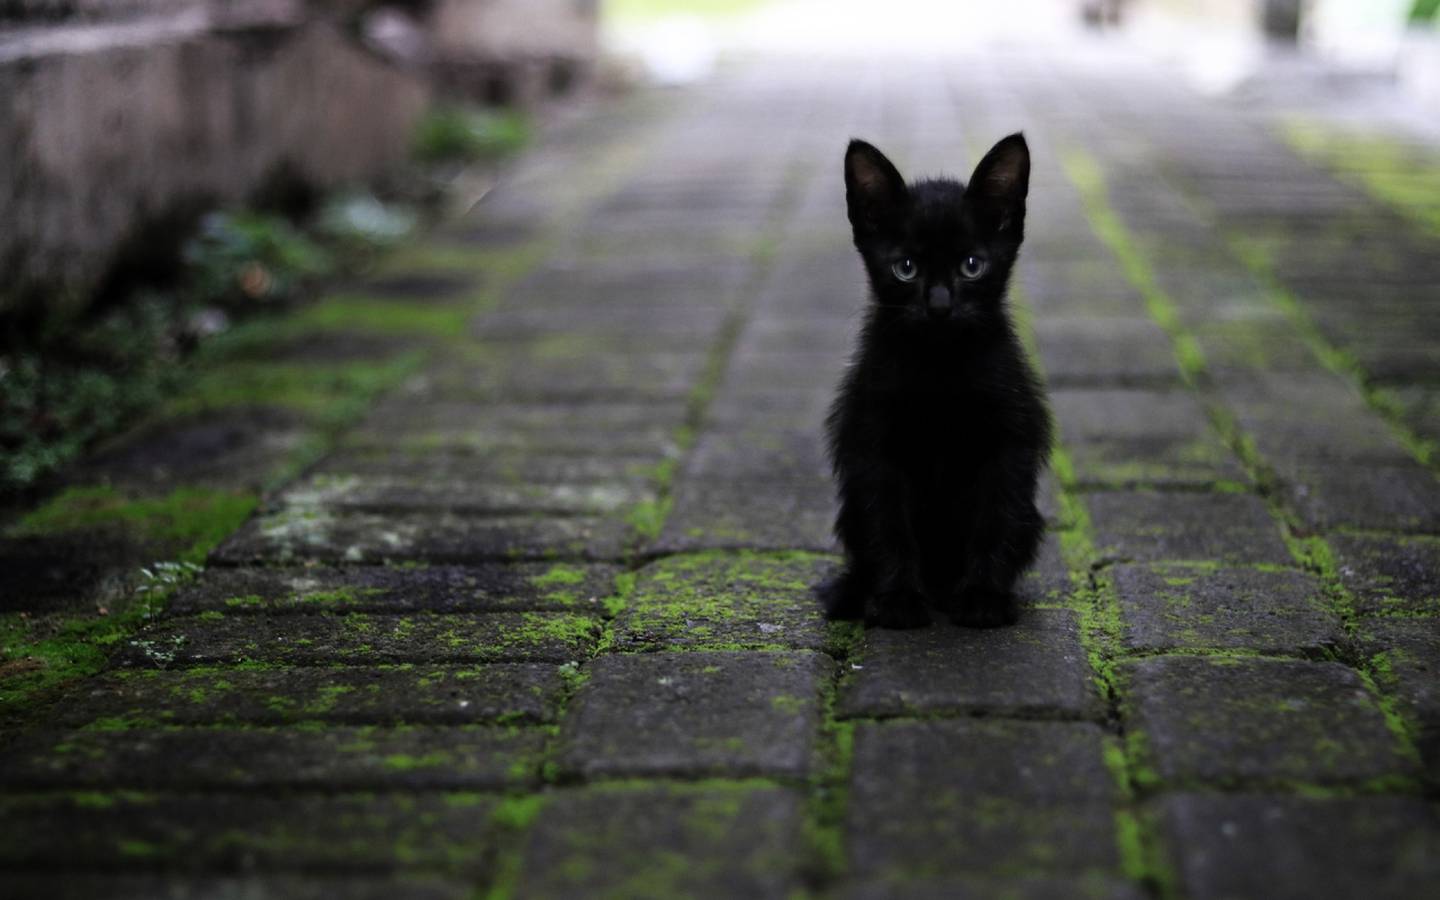 Gato negro bebé sobre una superficie de adoquines musgosos